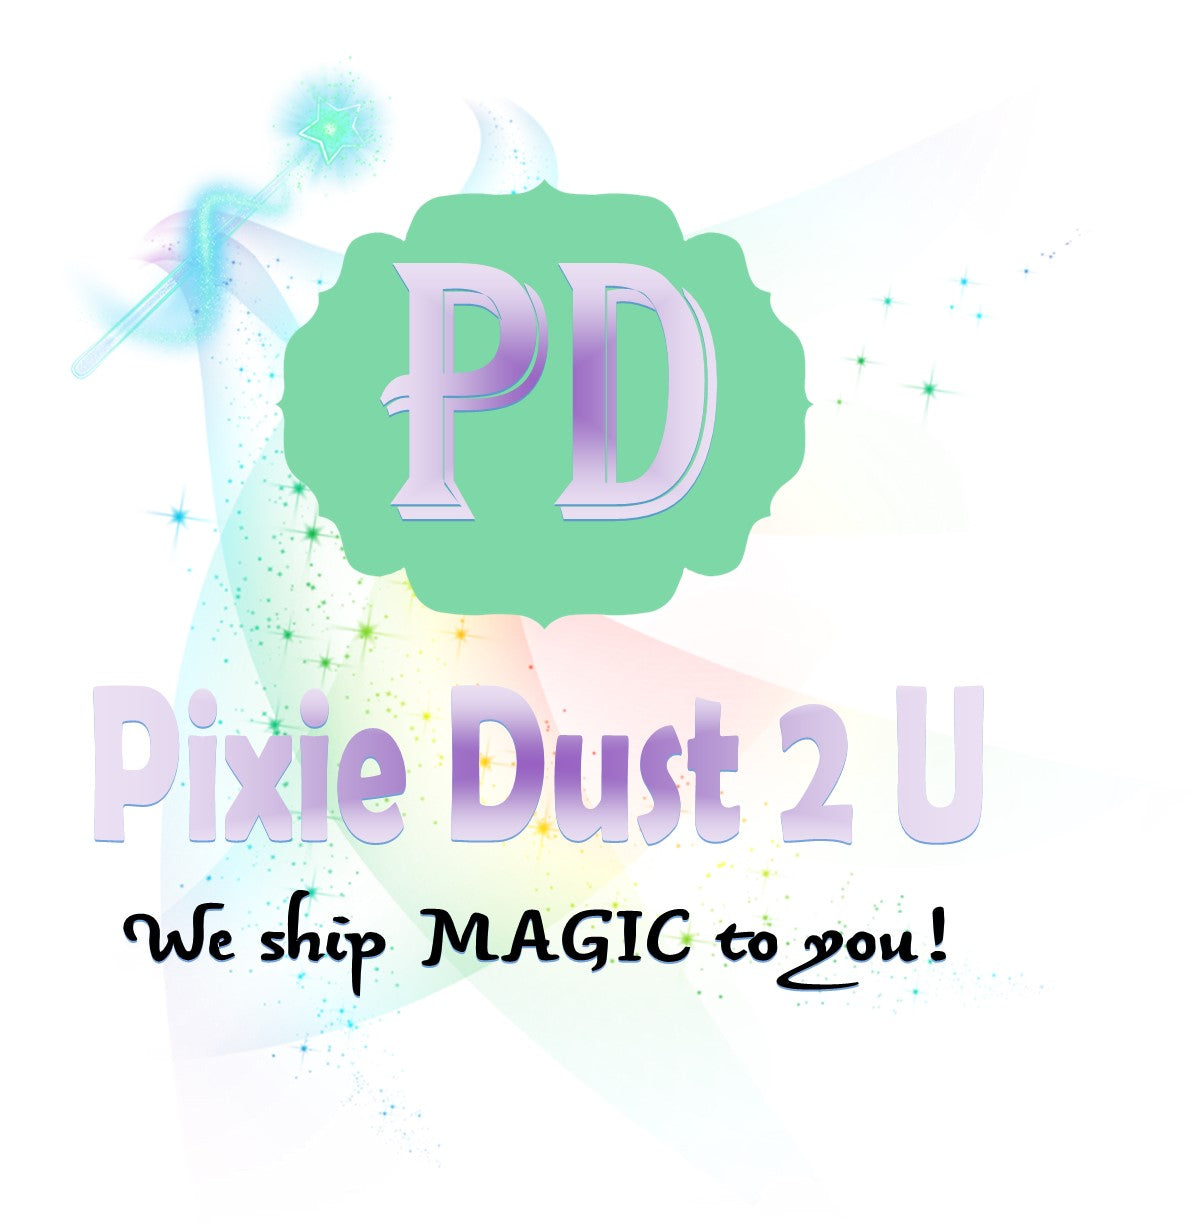 Pixie Dust 2 U